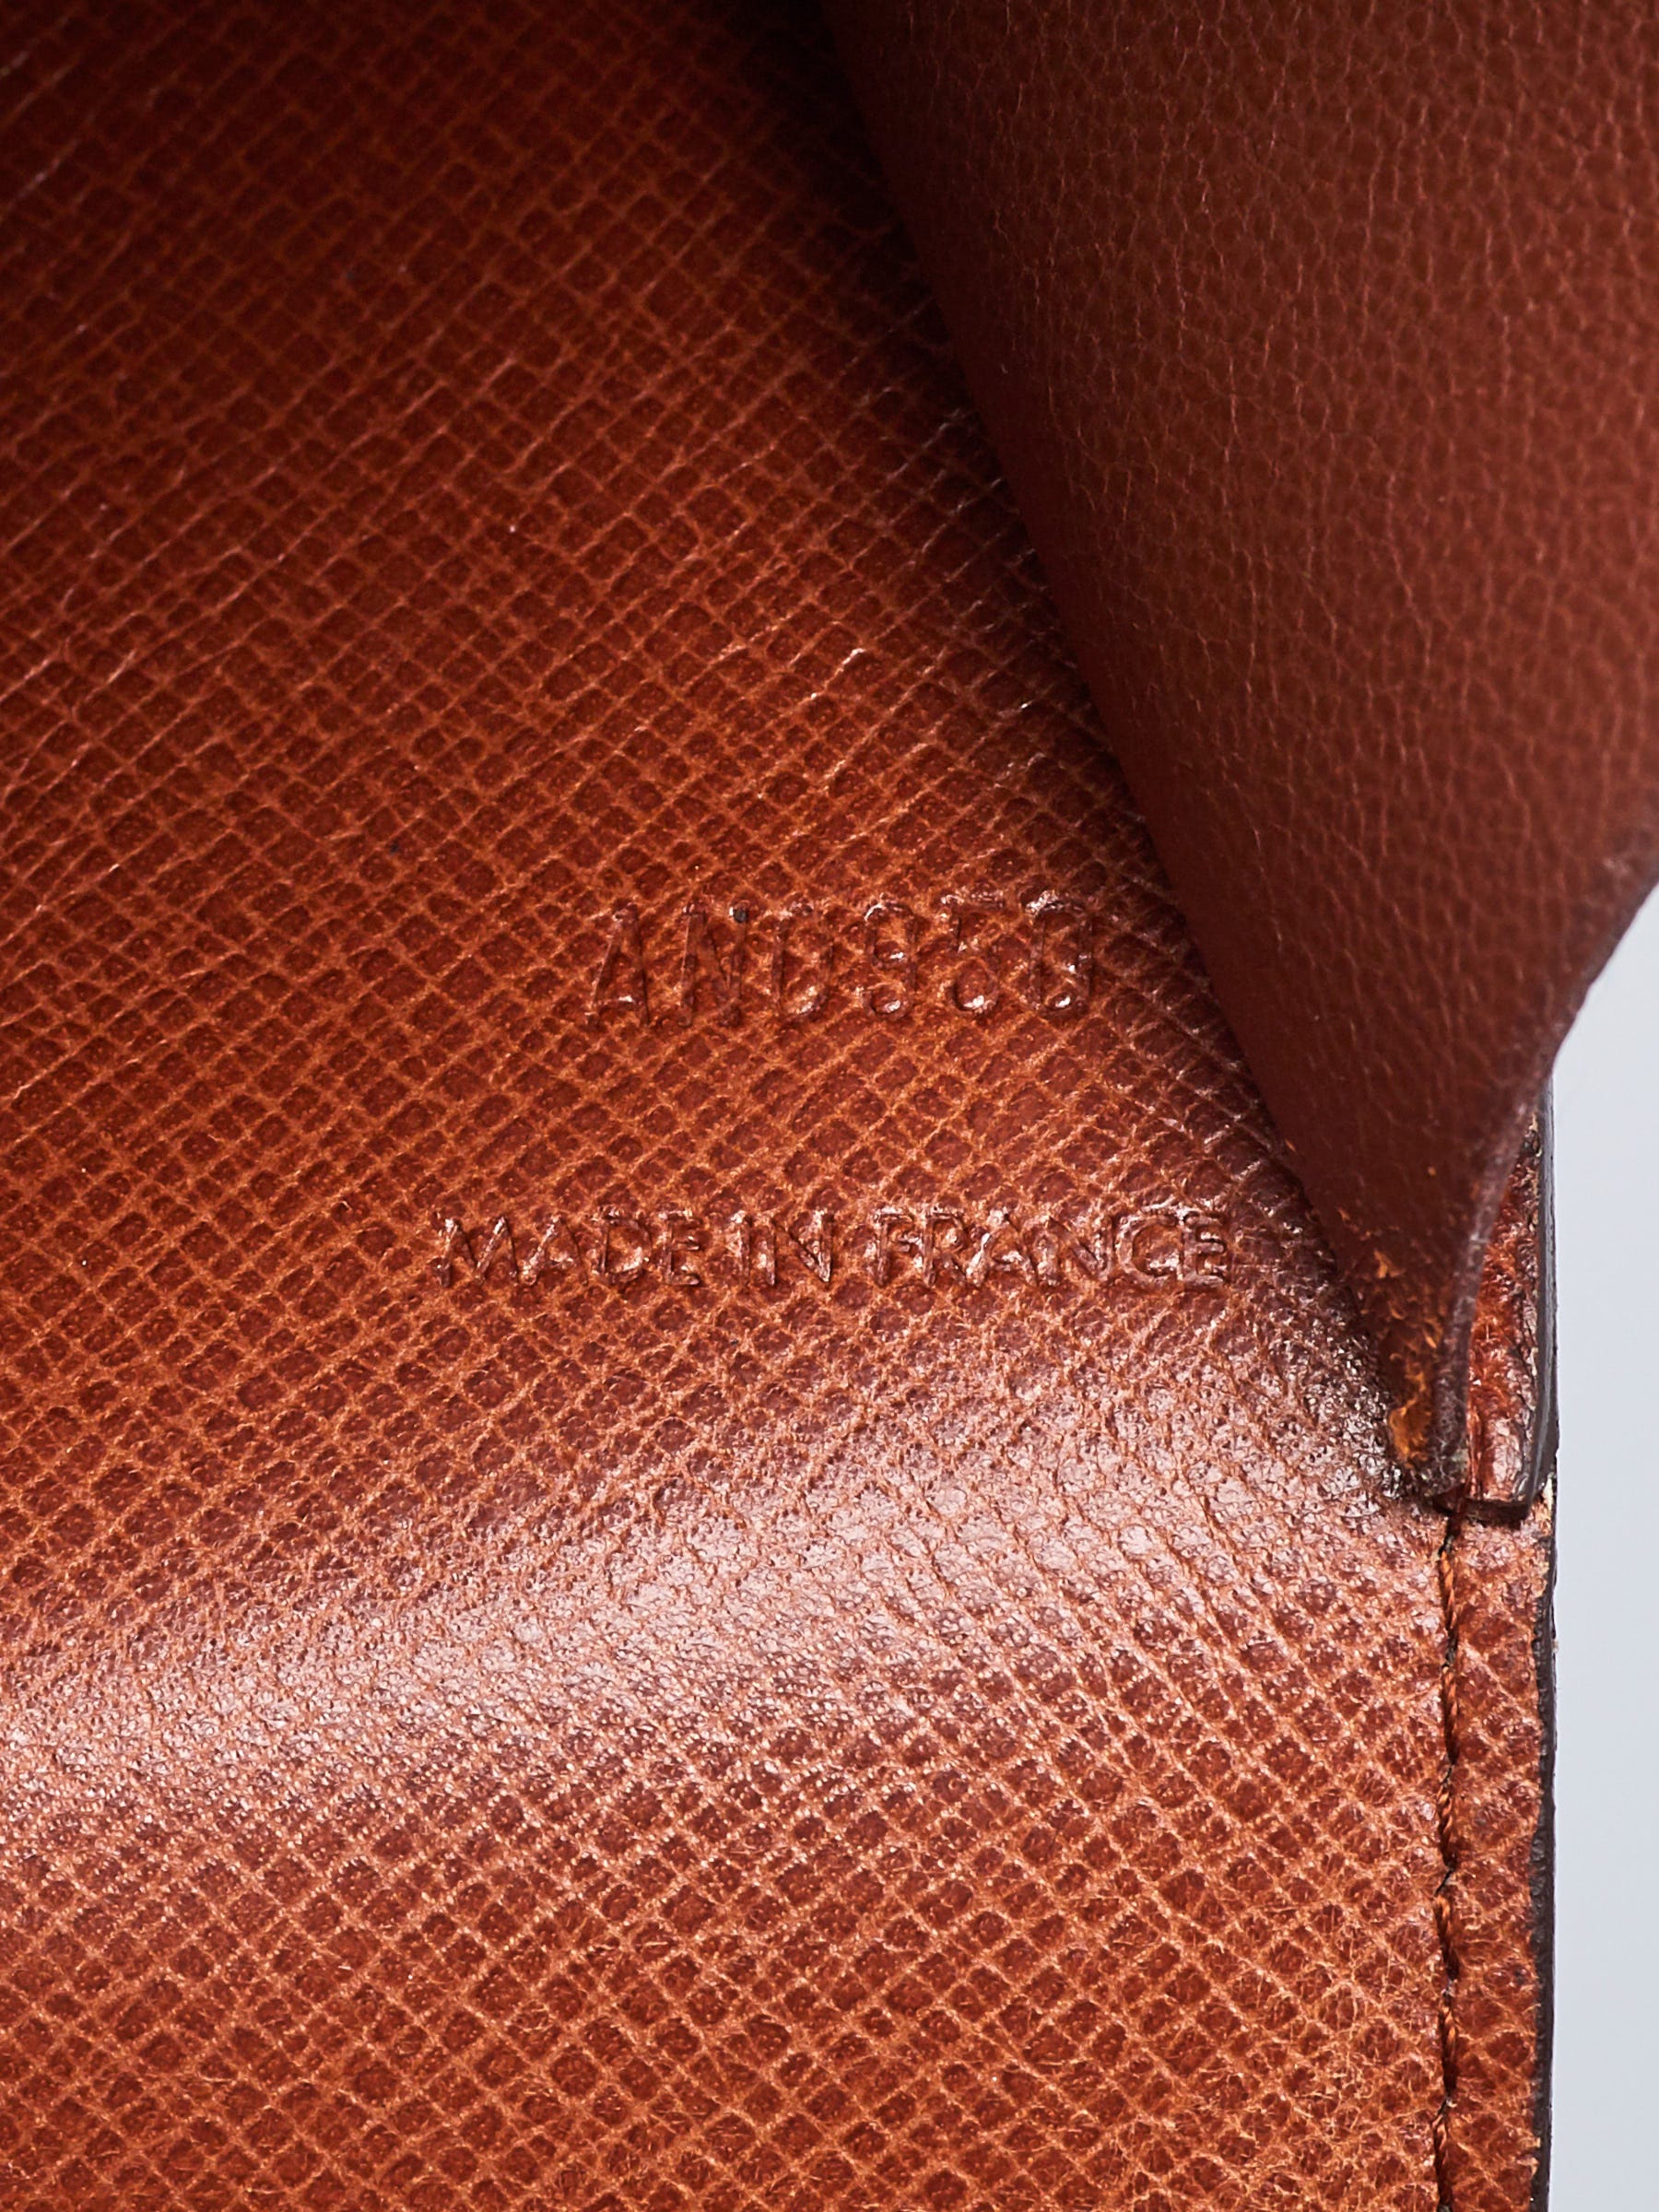 Louis Vuitton MONOGRAM Desk agenda cover (R21065, R20974, R20100)